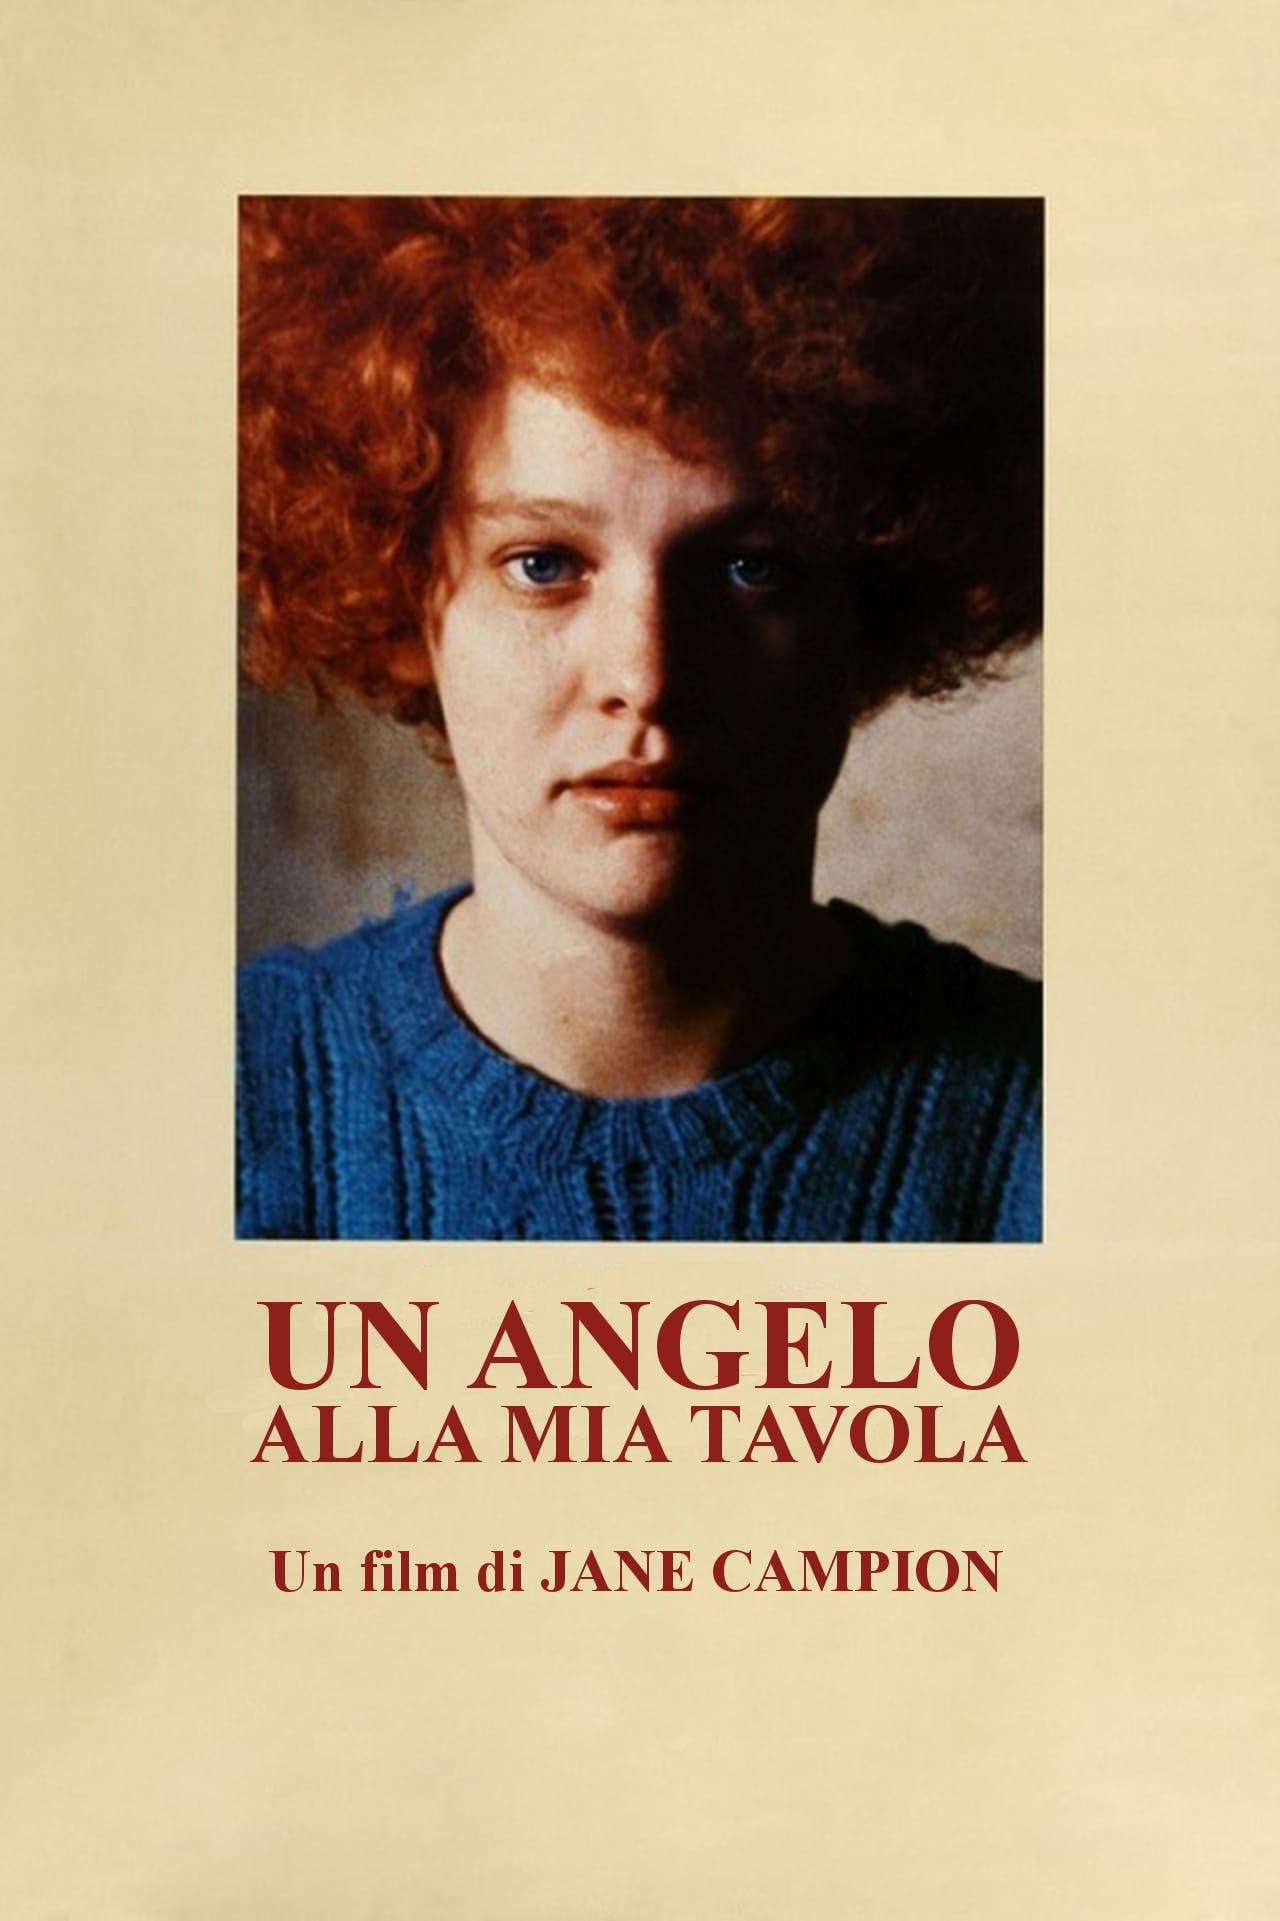 Un angelo alla mia tavola [HD] (1990)